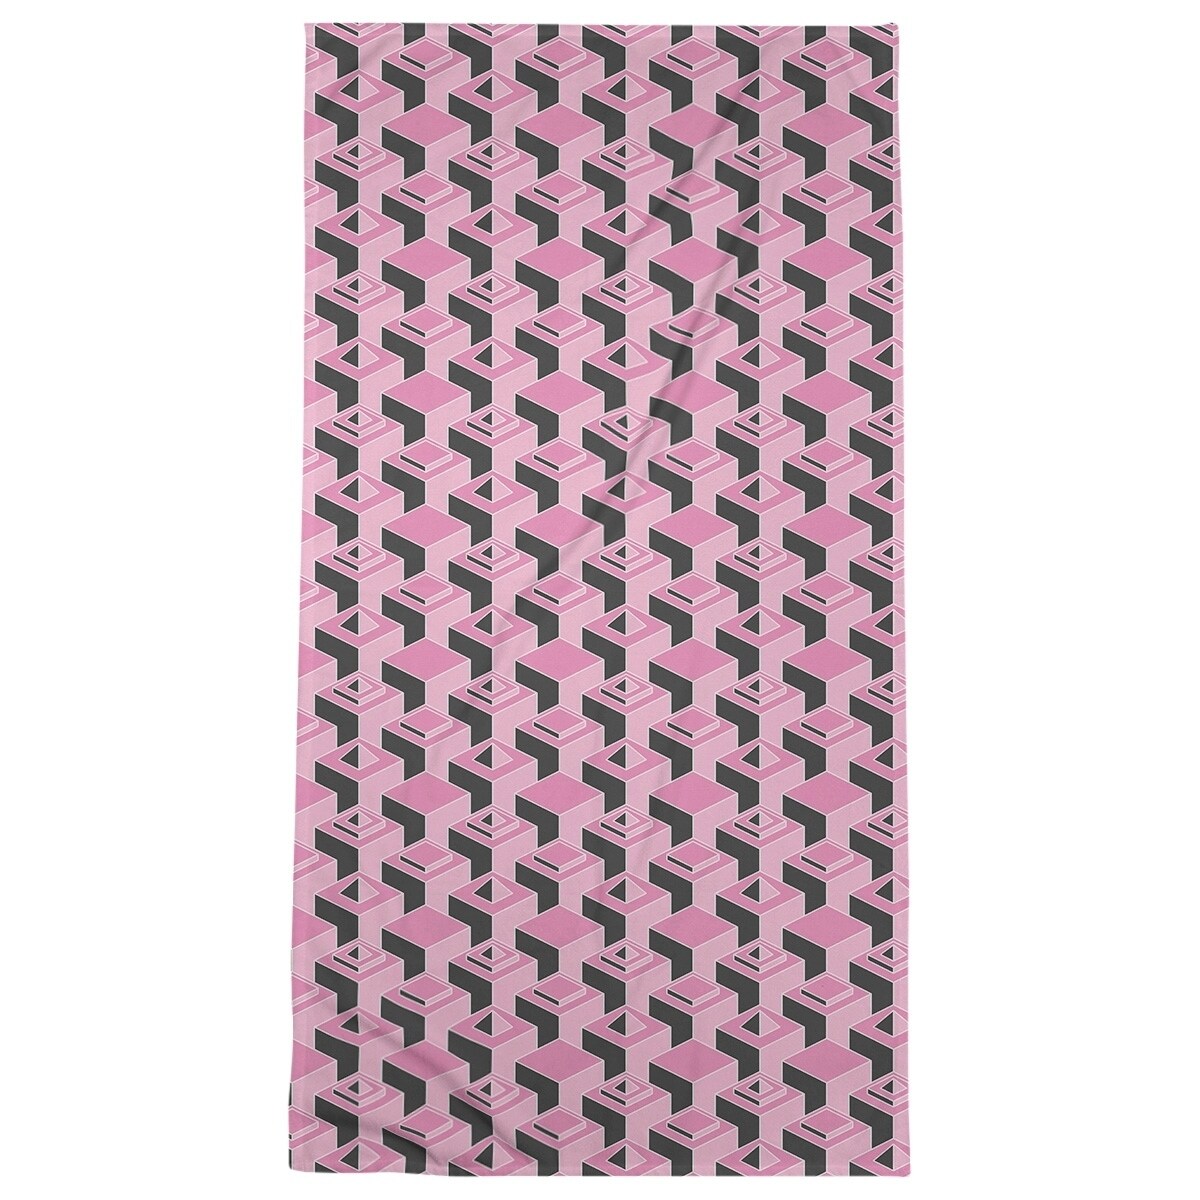 Black & Color Skyscrapers Pattern Bath Towel - 30 x 60